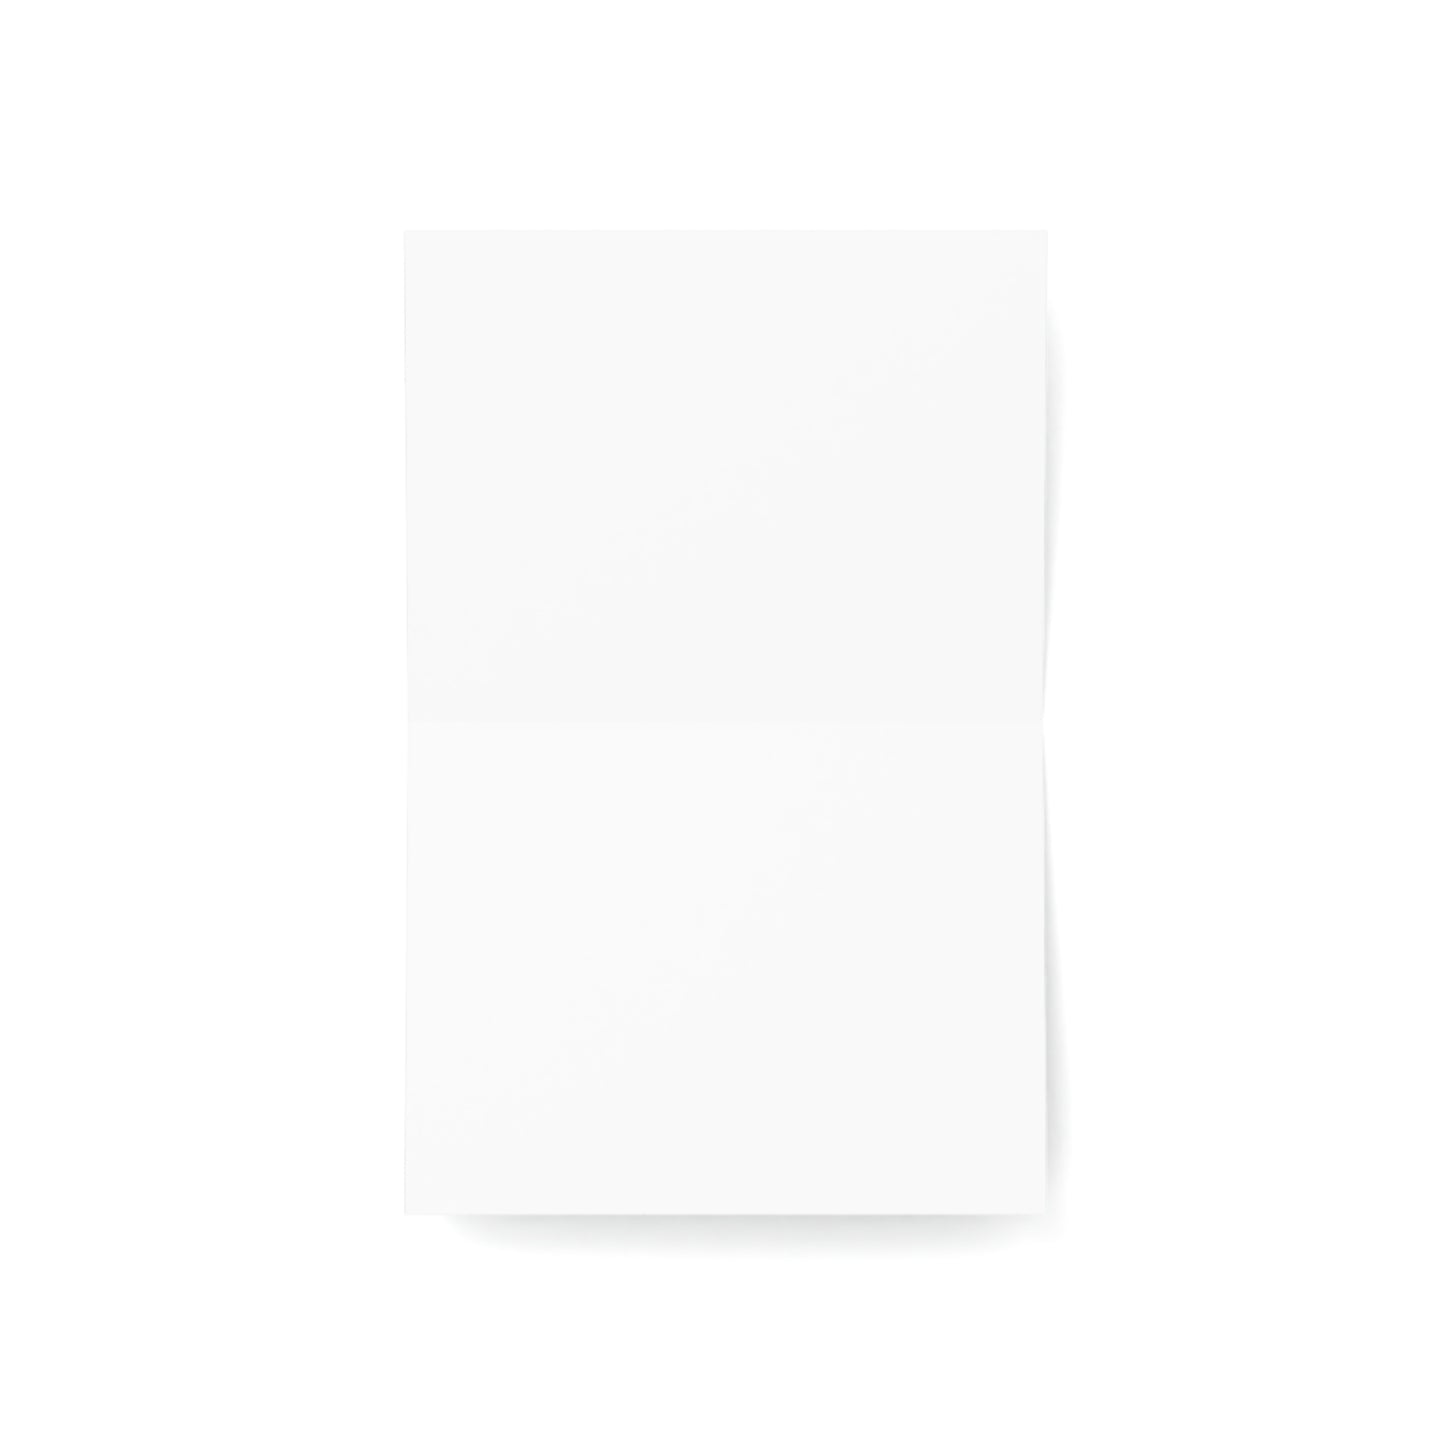 Folded Greeting Cards Horizontal (1, 10, 30, and 50pcs) Calm Down - Design No.100